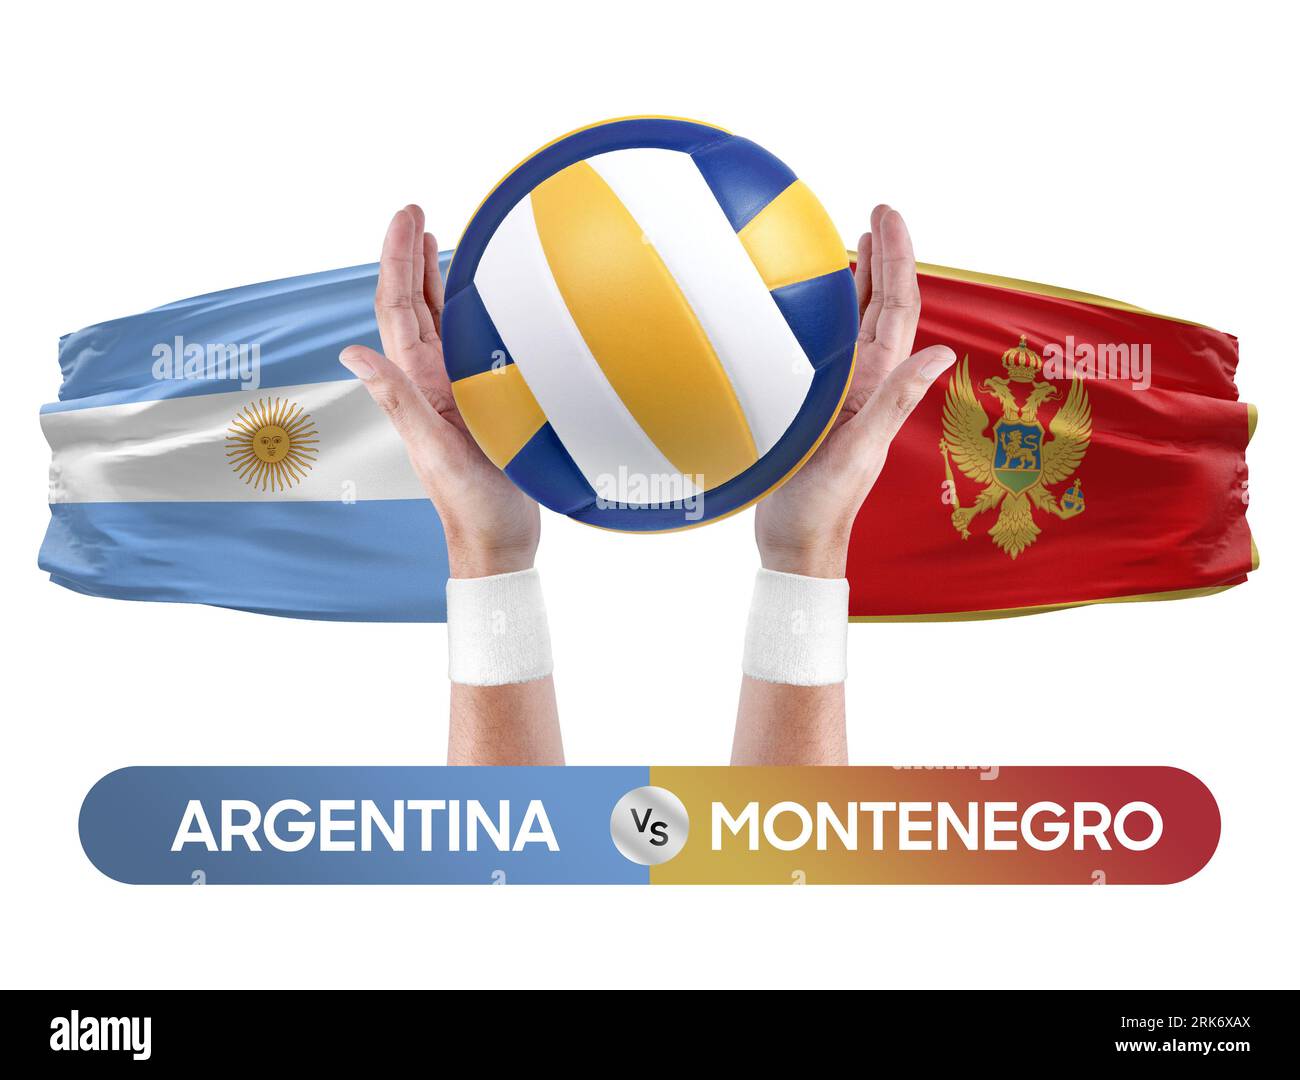 Argentinien gegen Montenegro Nationalmannschaften Volleyball Volleyball-Volleyball-Spiel-Wettkampf-Konzept. Stockfoto